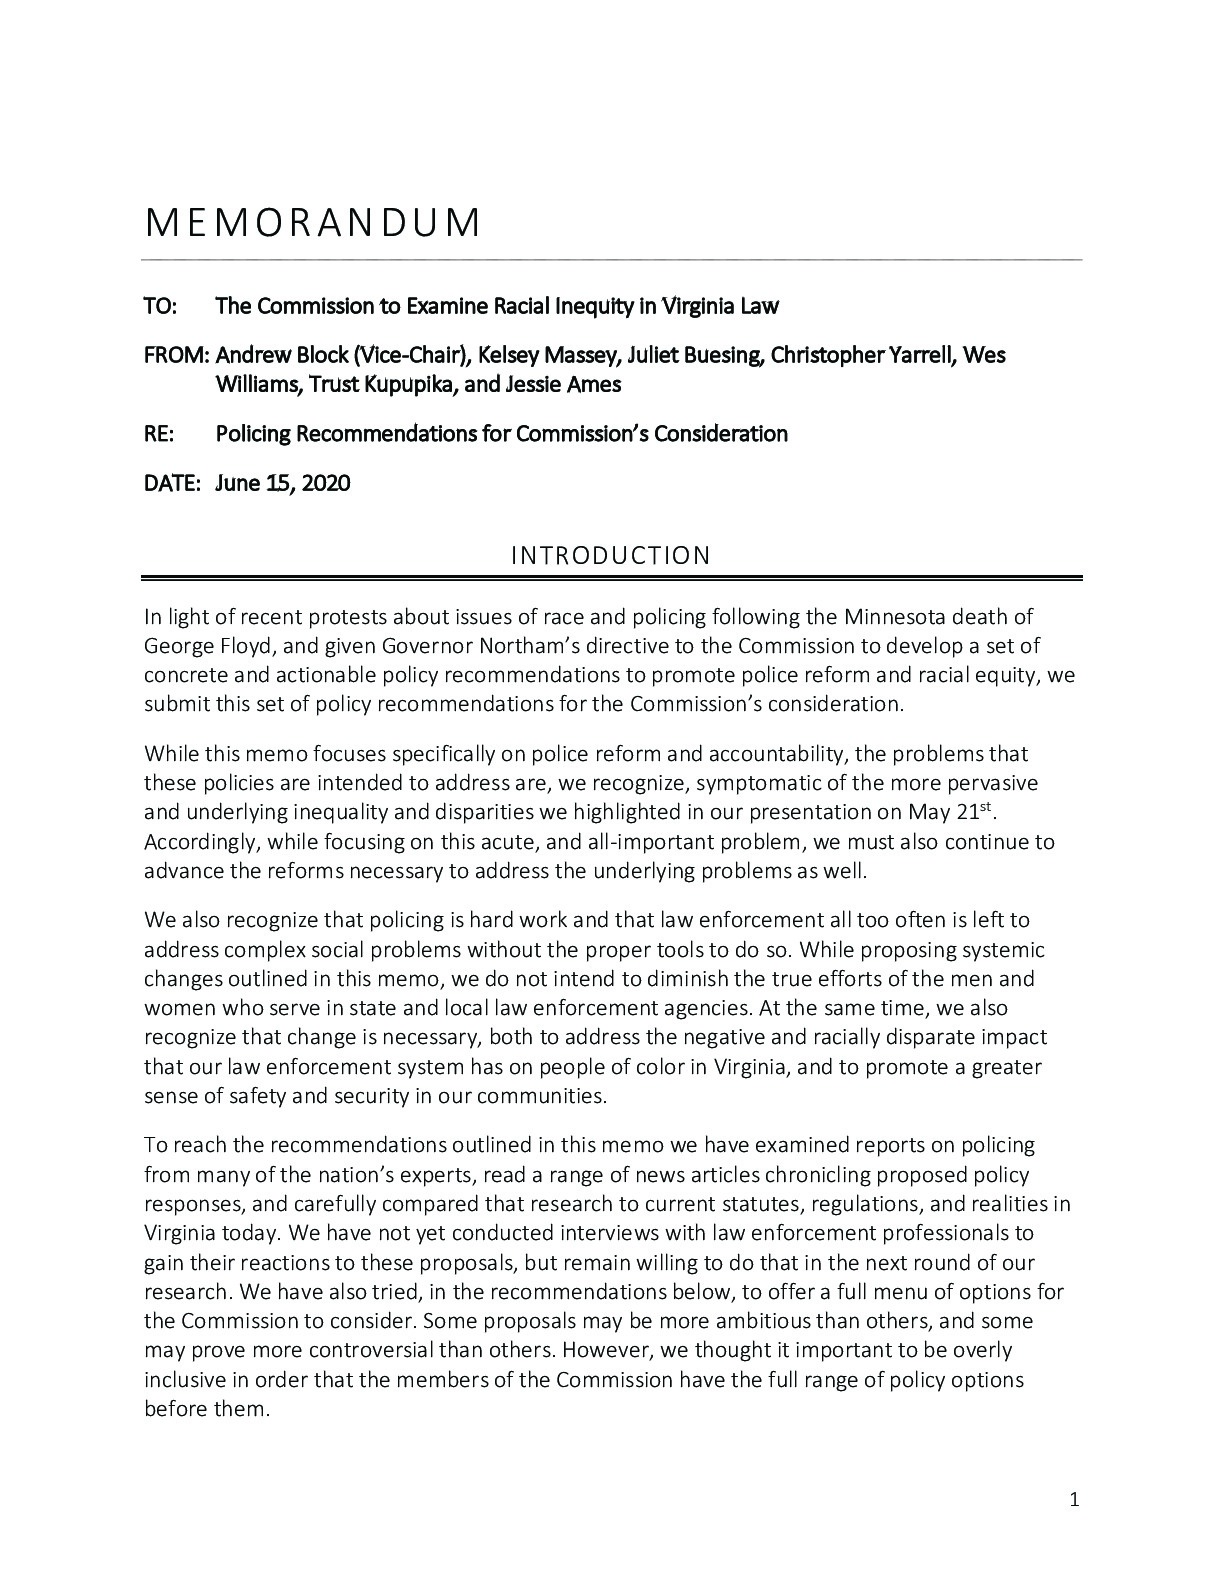 FINAL-Policy-Memo-UVA-LAW-8th-meeting-with-amendments.pdf